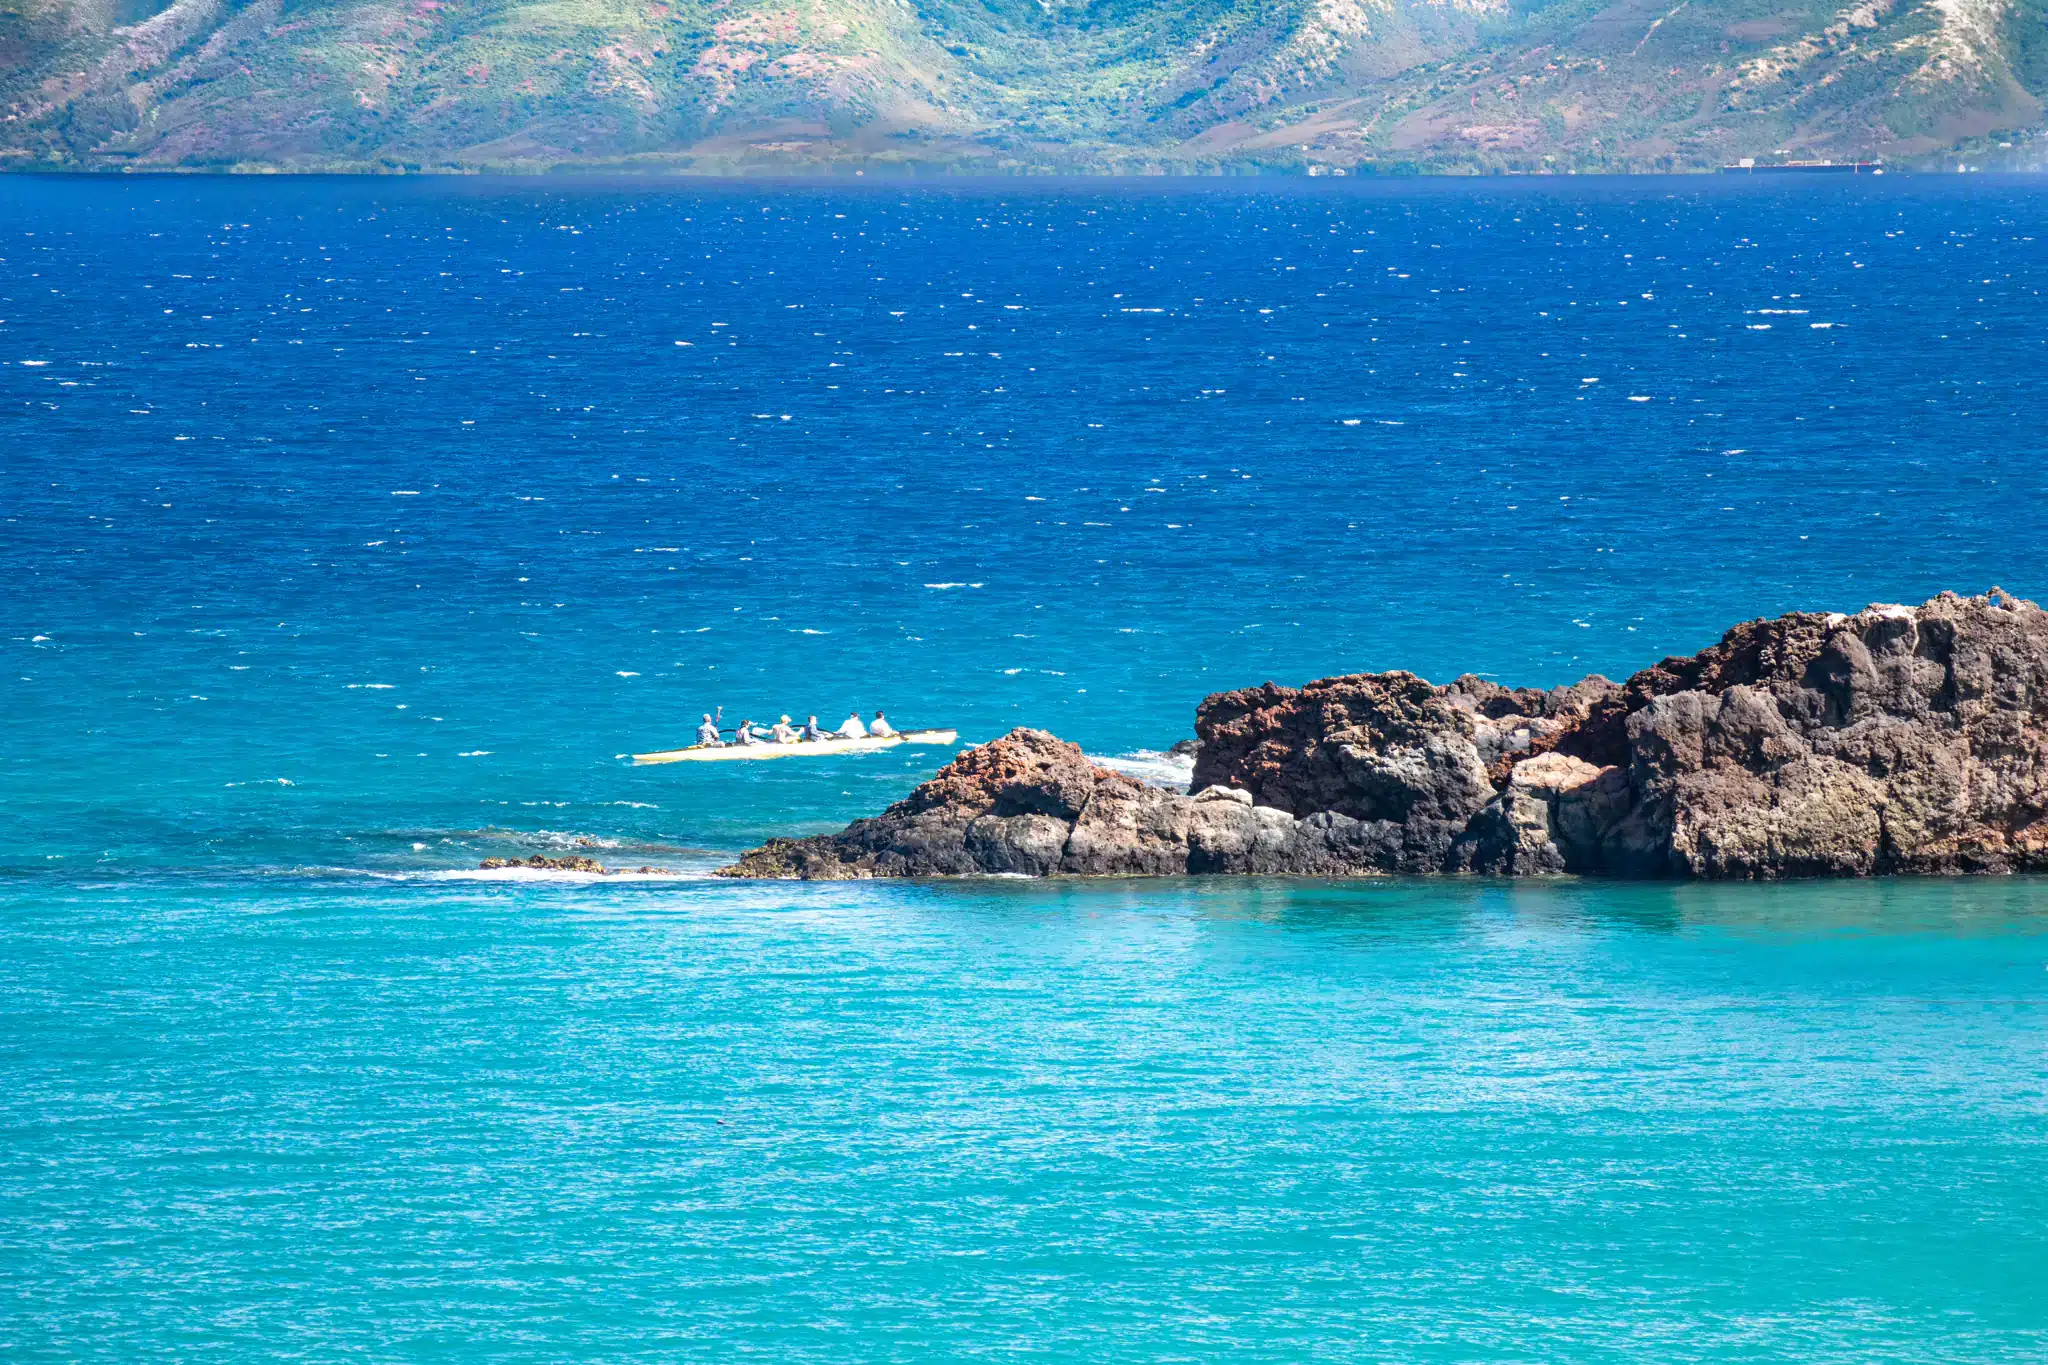 Pu'u Keka'a (Black Rock) is a Heritage Site located in the city of Kaanapali on Maui, Hawaii